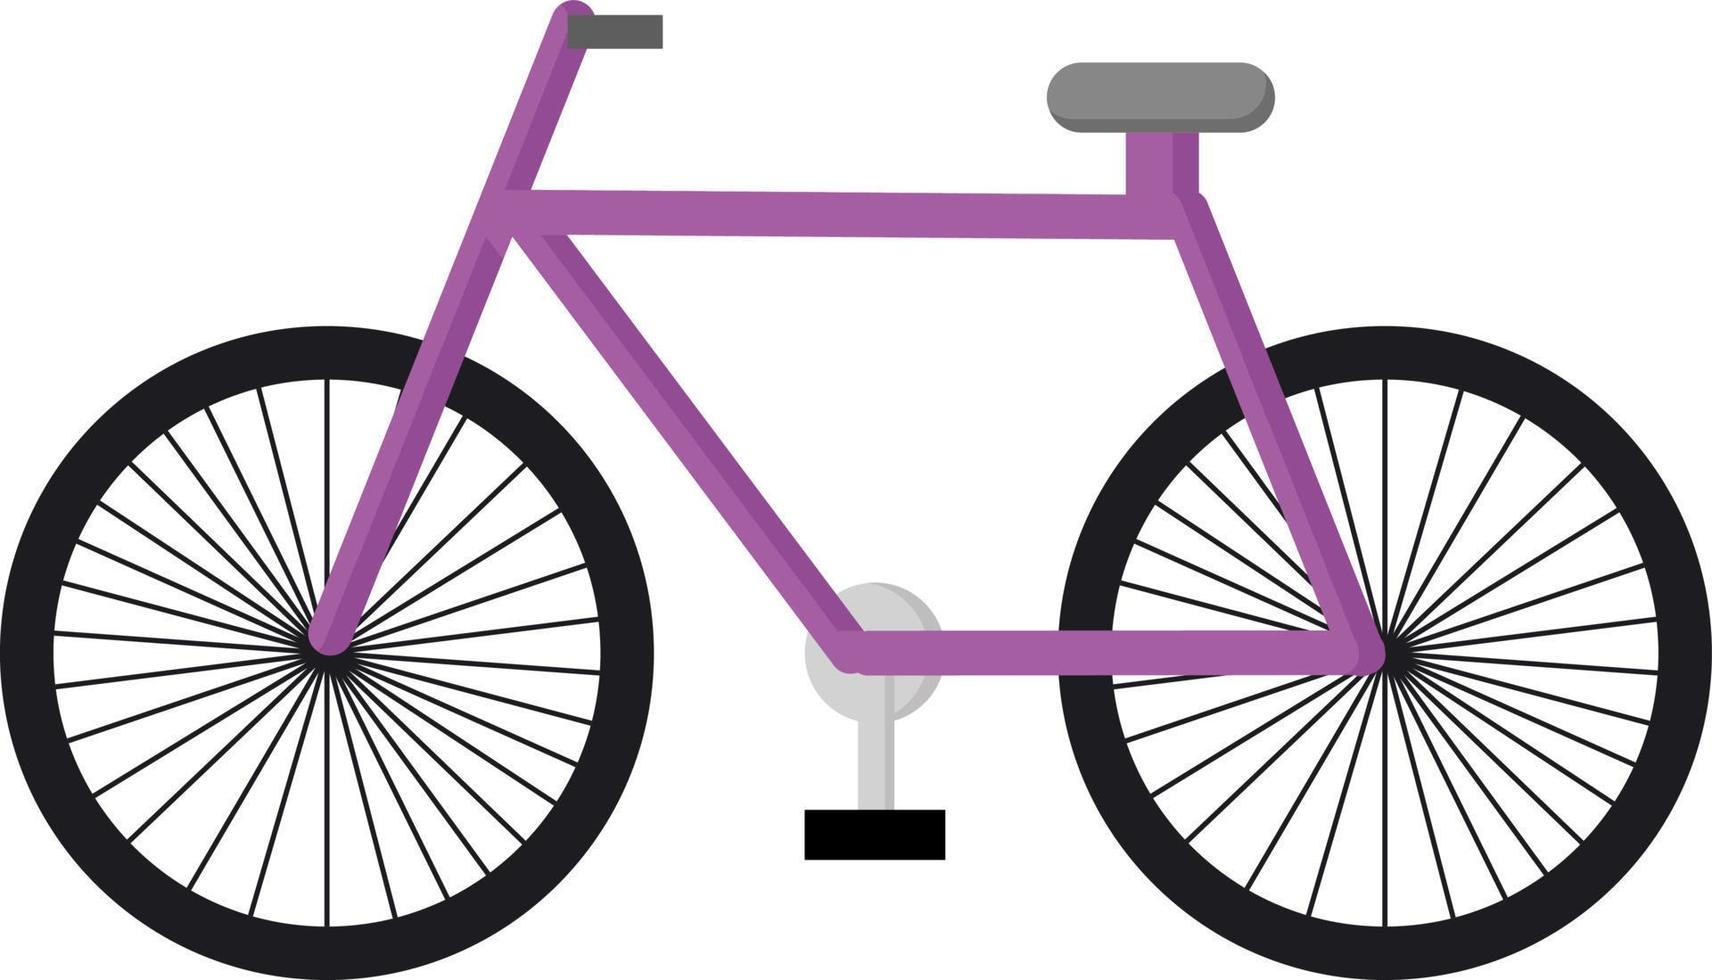 Pink bike, illustration, vector on white background.